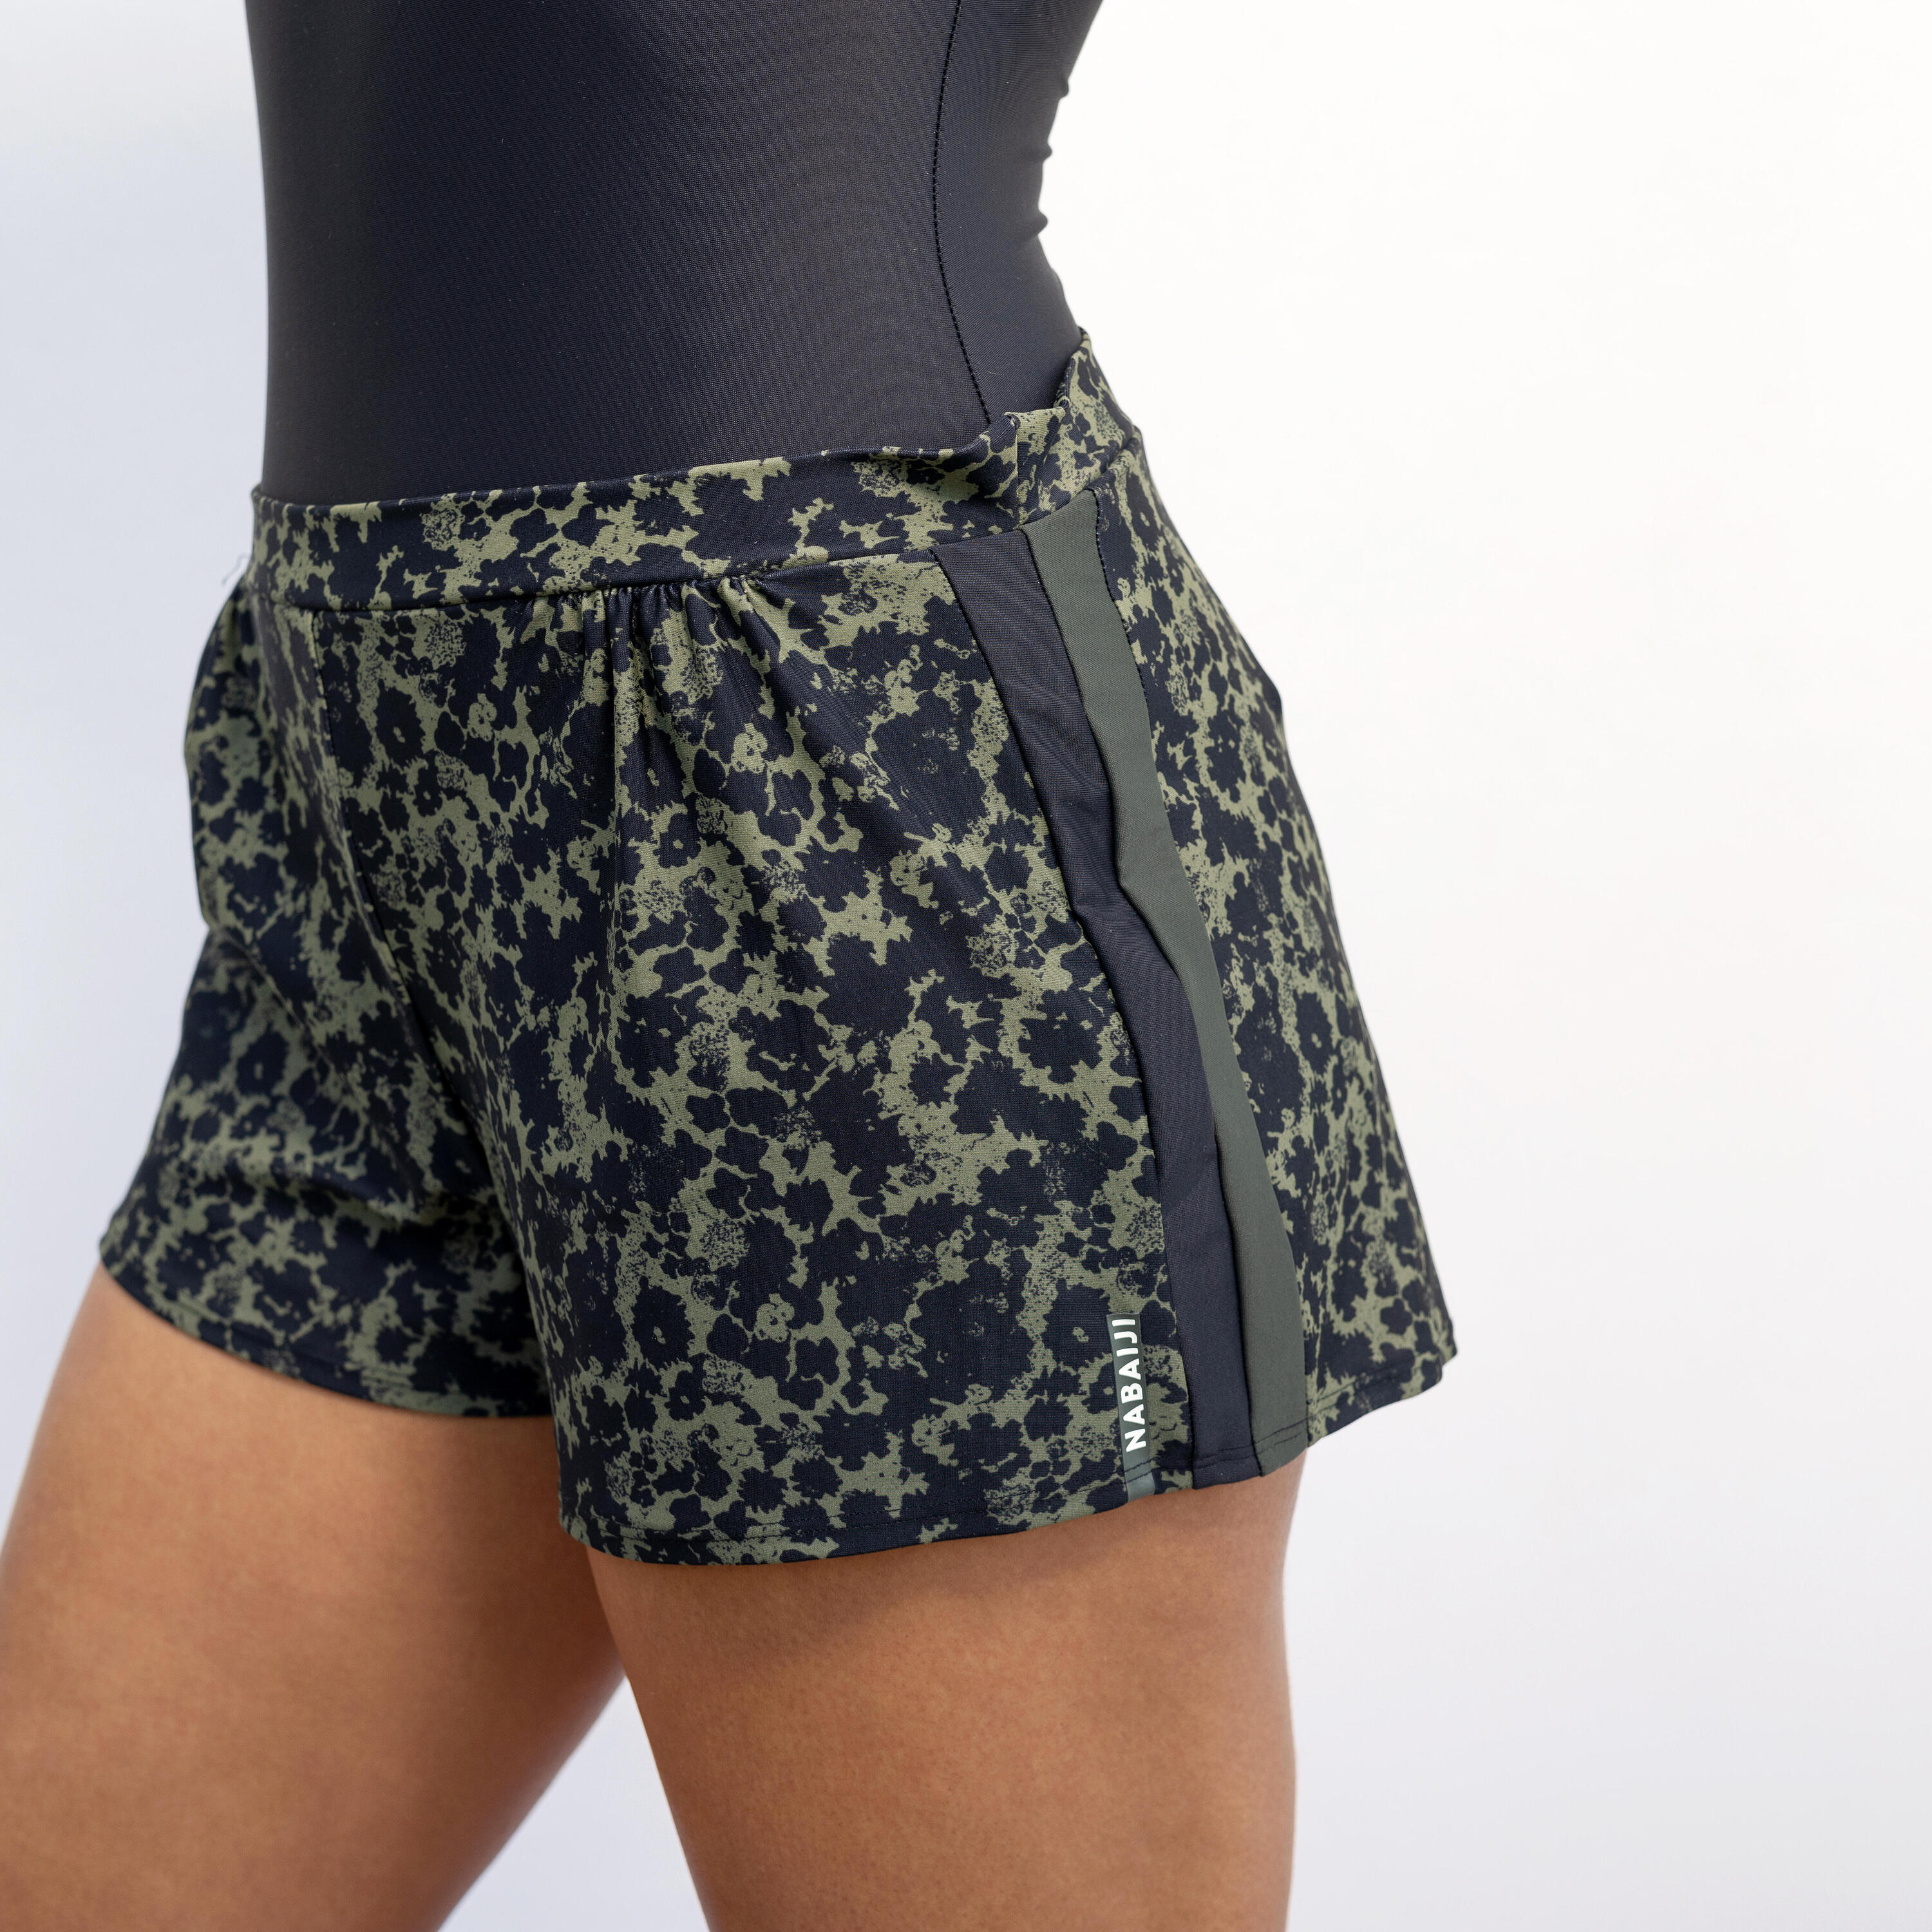 Women's 1-piece loose Aquafit swimsuit shorts Sofi Lica Black Khaki 4/4